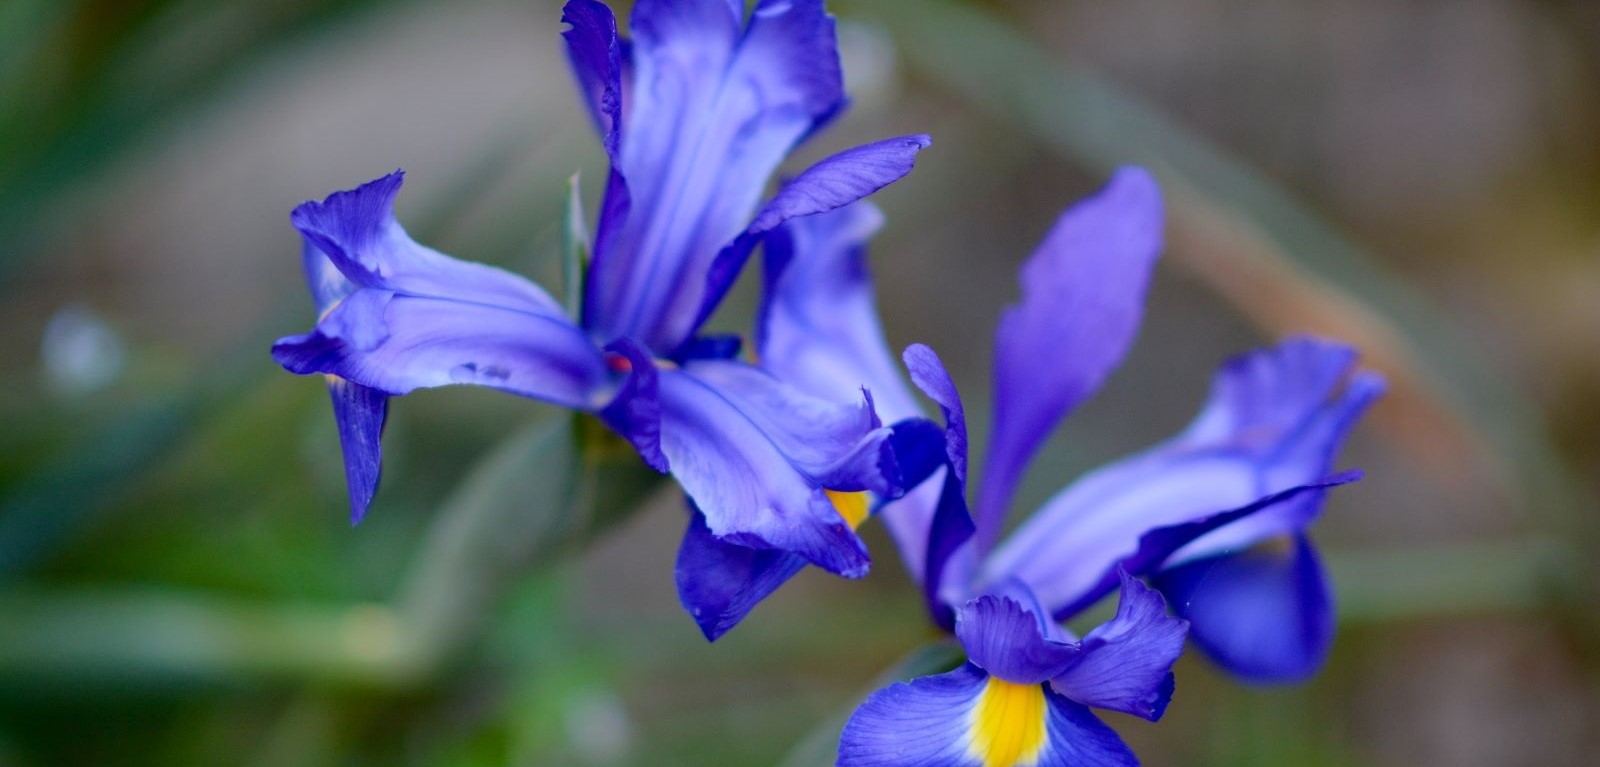 A blue flower representing the Iris symbol